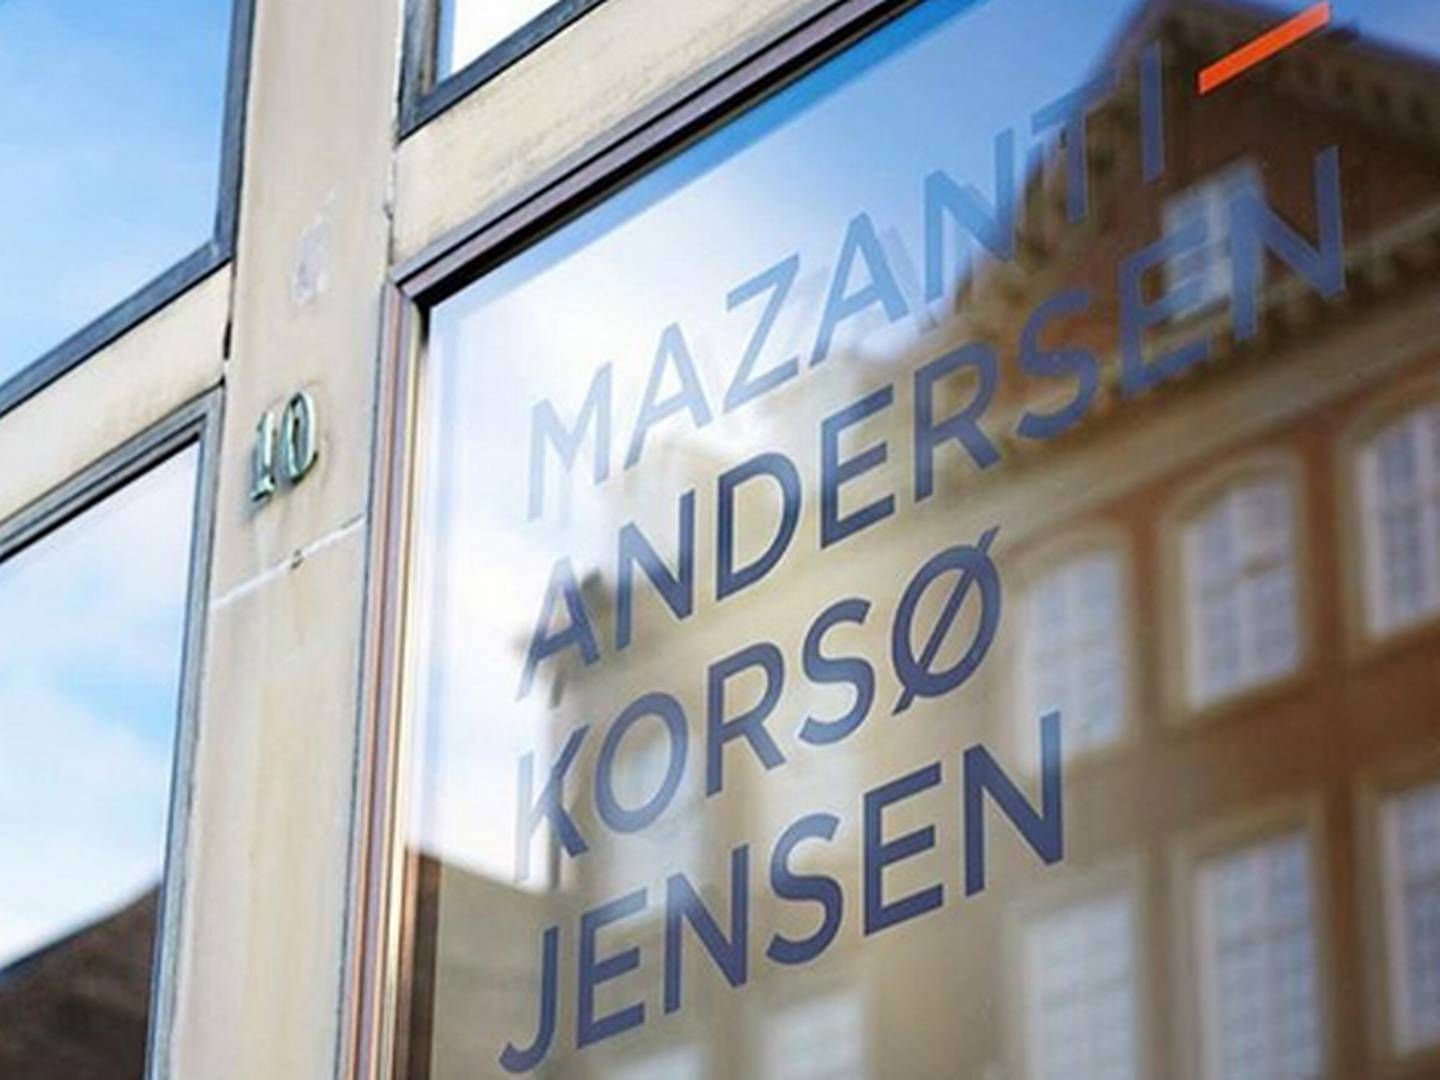 Foto: Mazanti-Andersen Korsø Jensen/PR